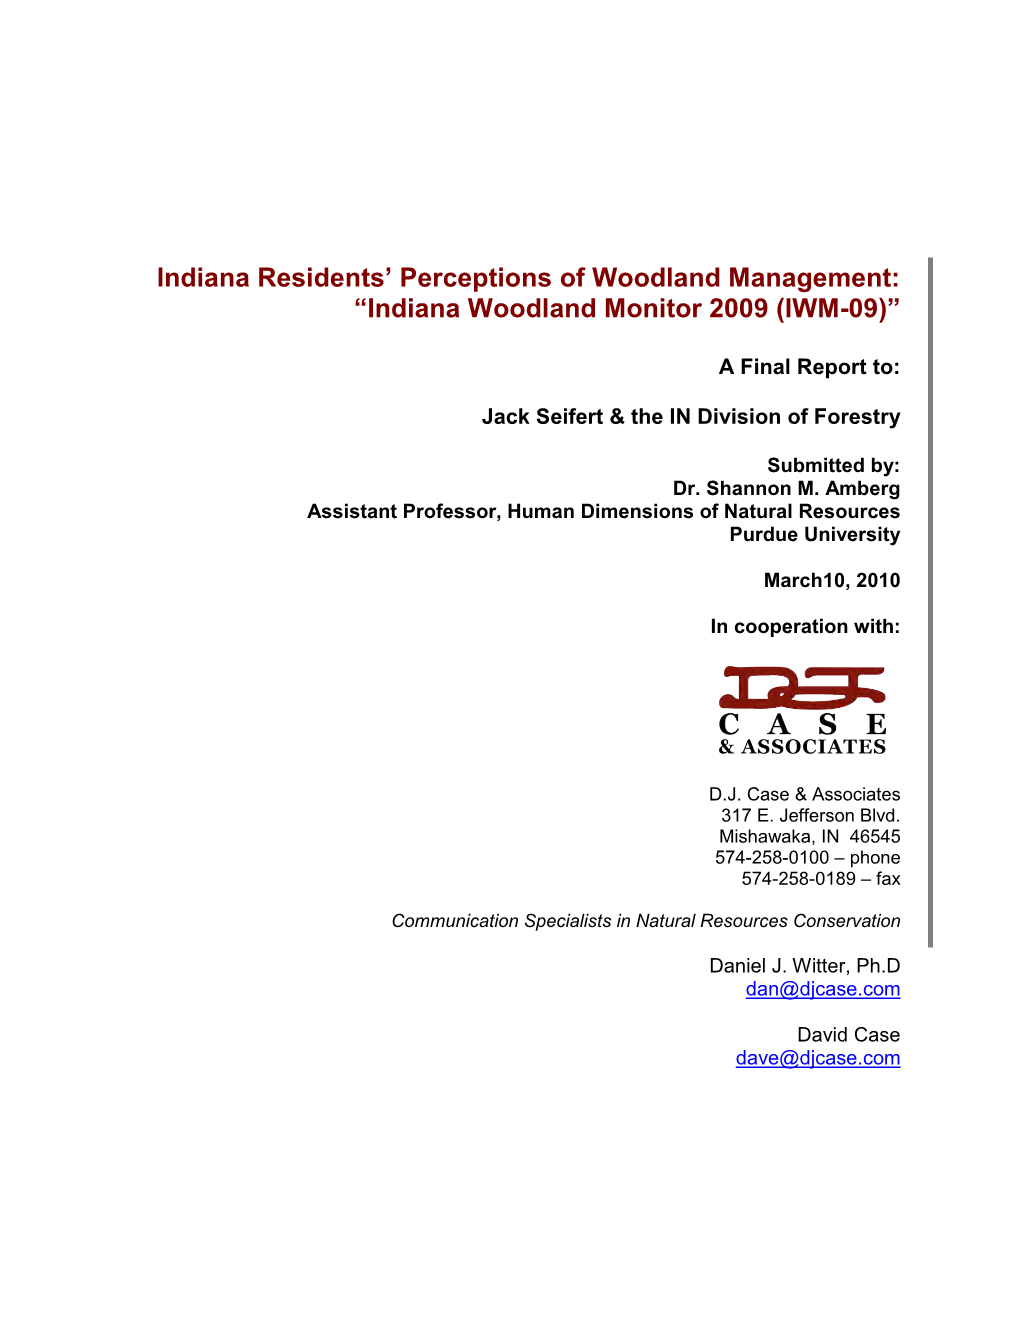 Indiana Residents' Perceptions of Woodland Management: “Indiana